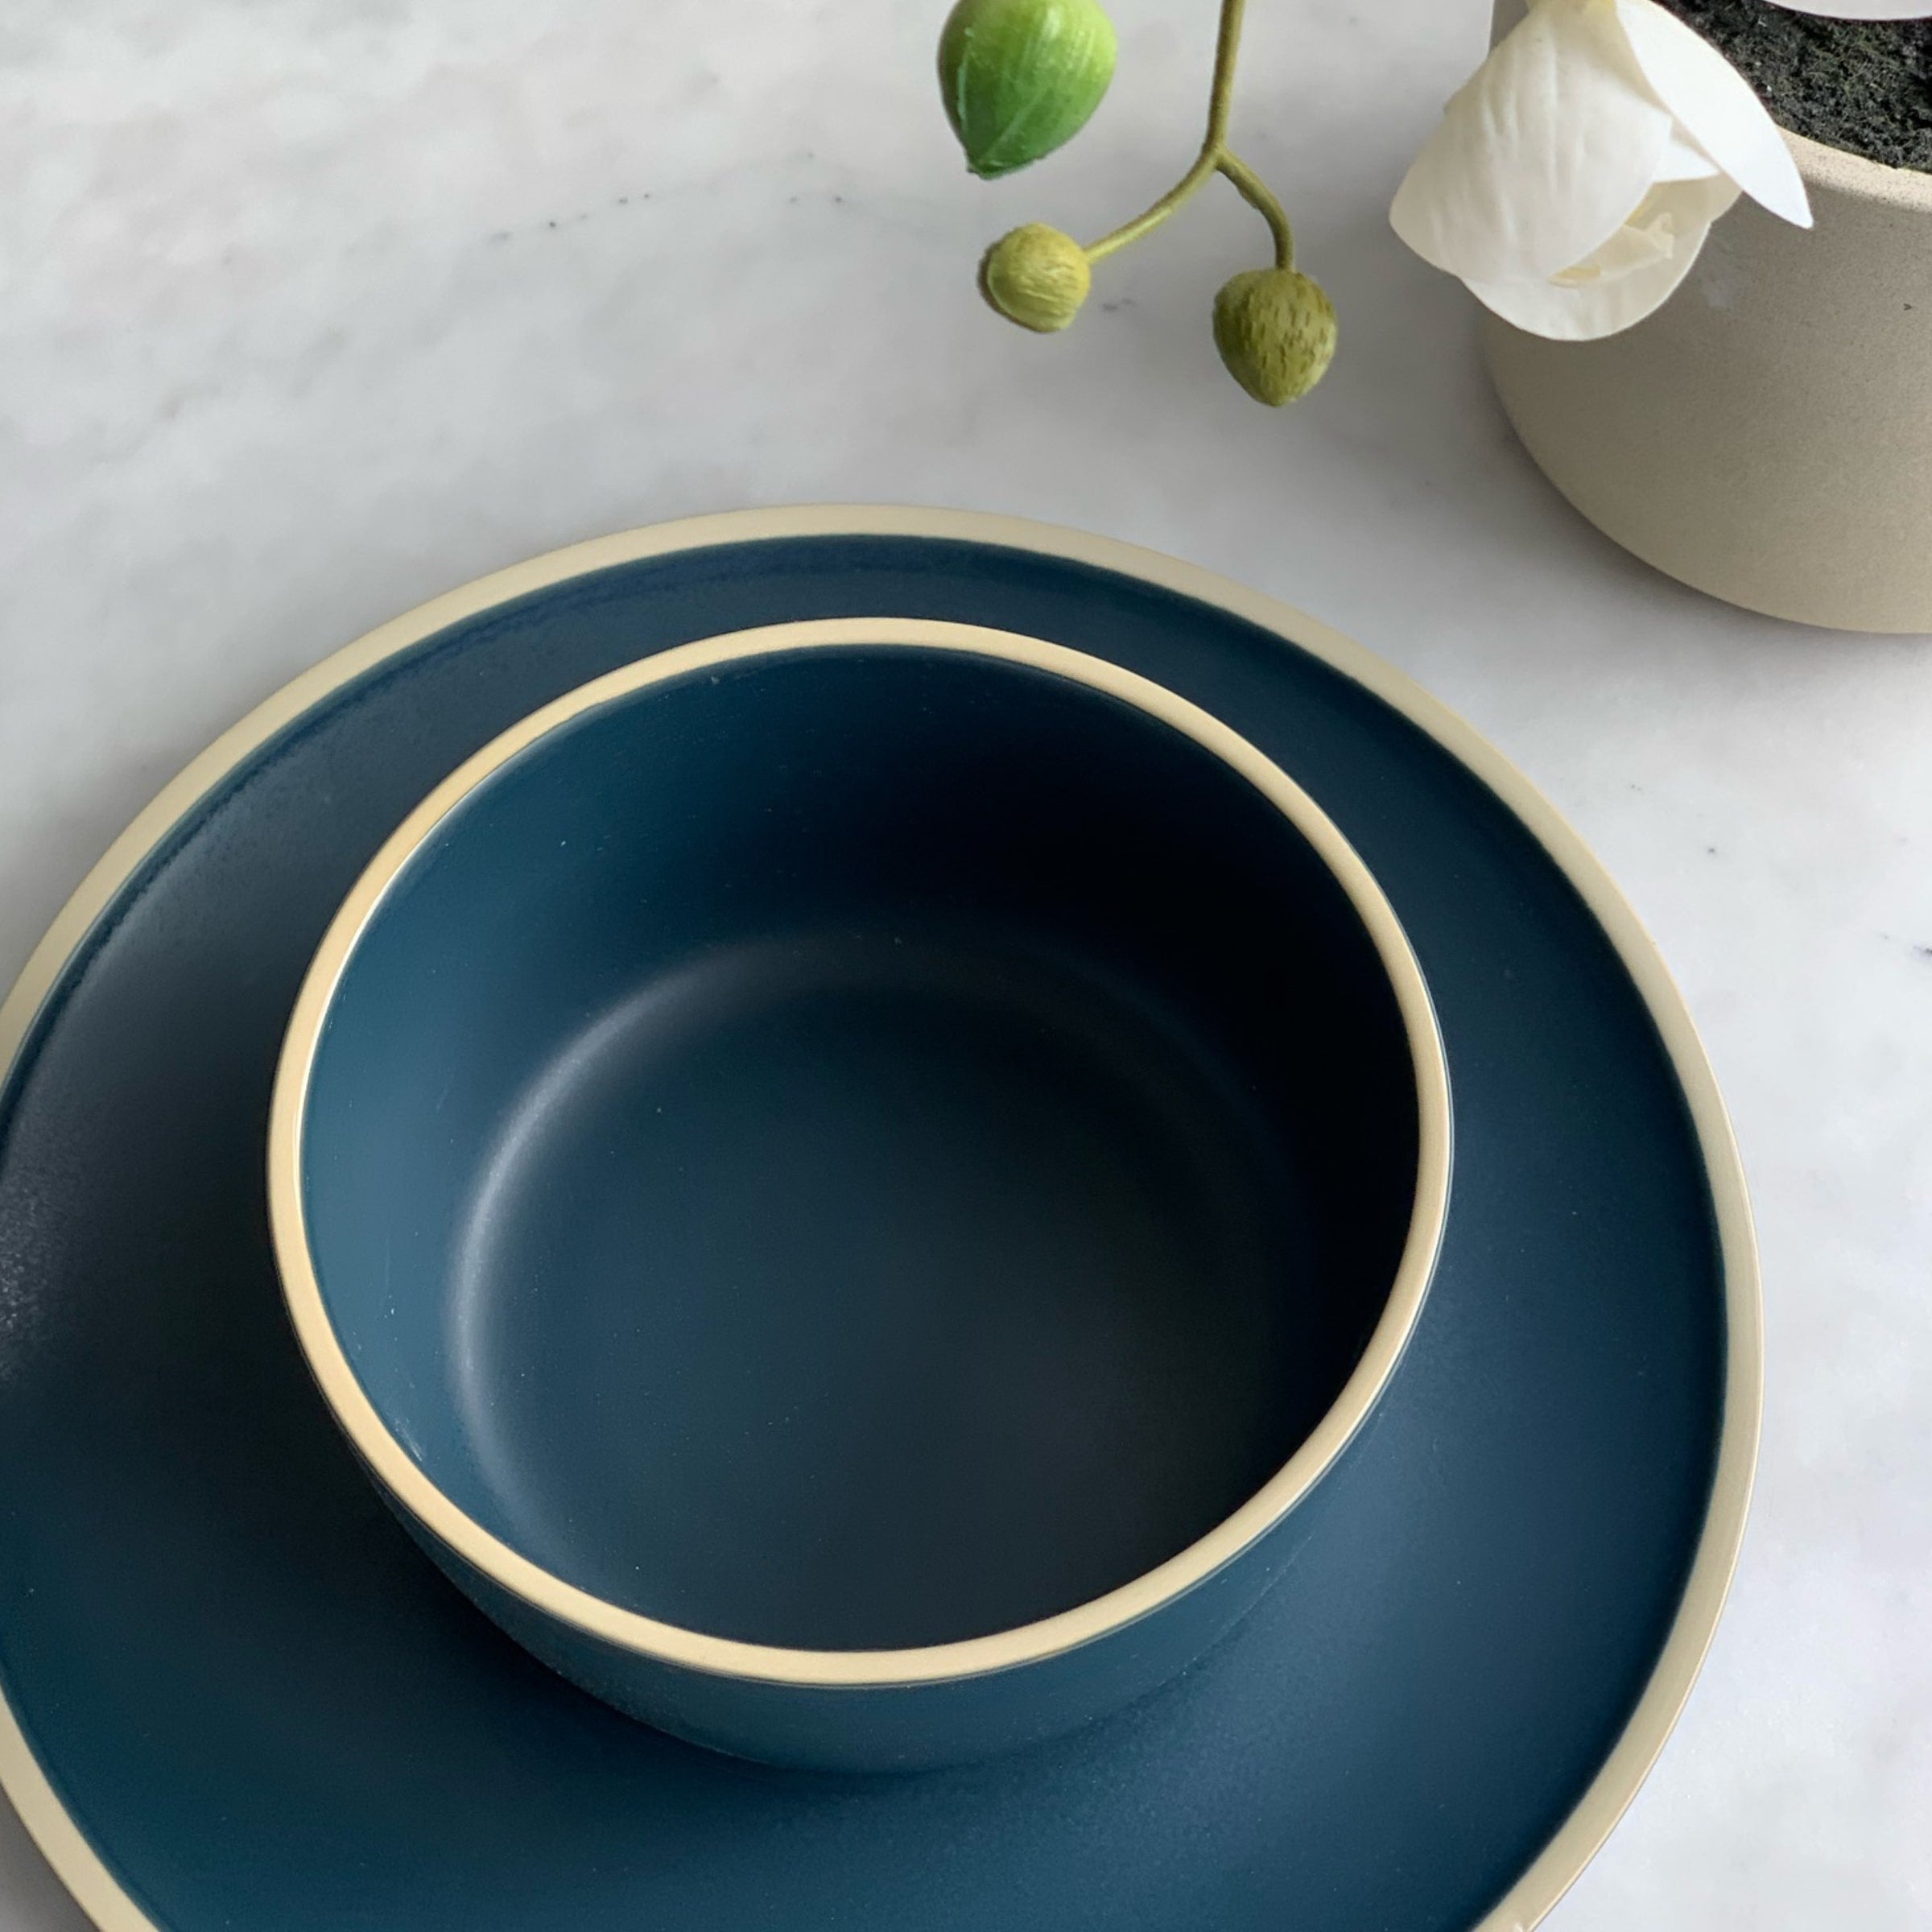 Hall Dinner Plate - Dark Blue - Buy Plates Online at FRANKY'S